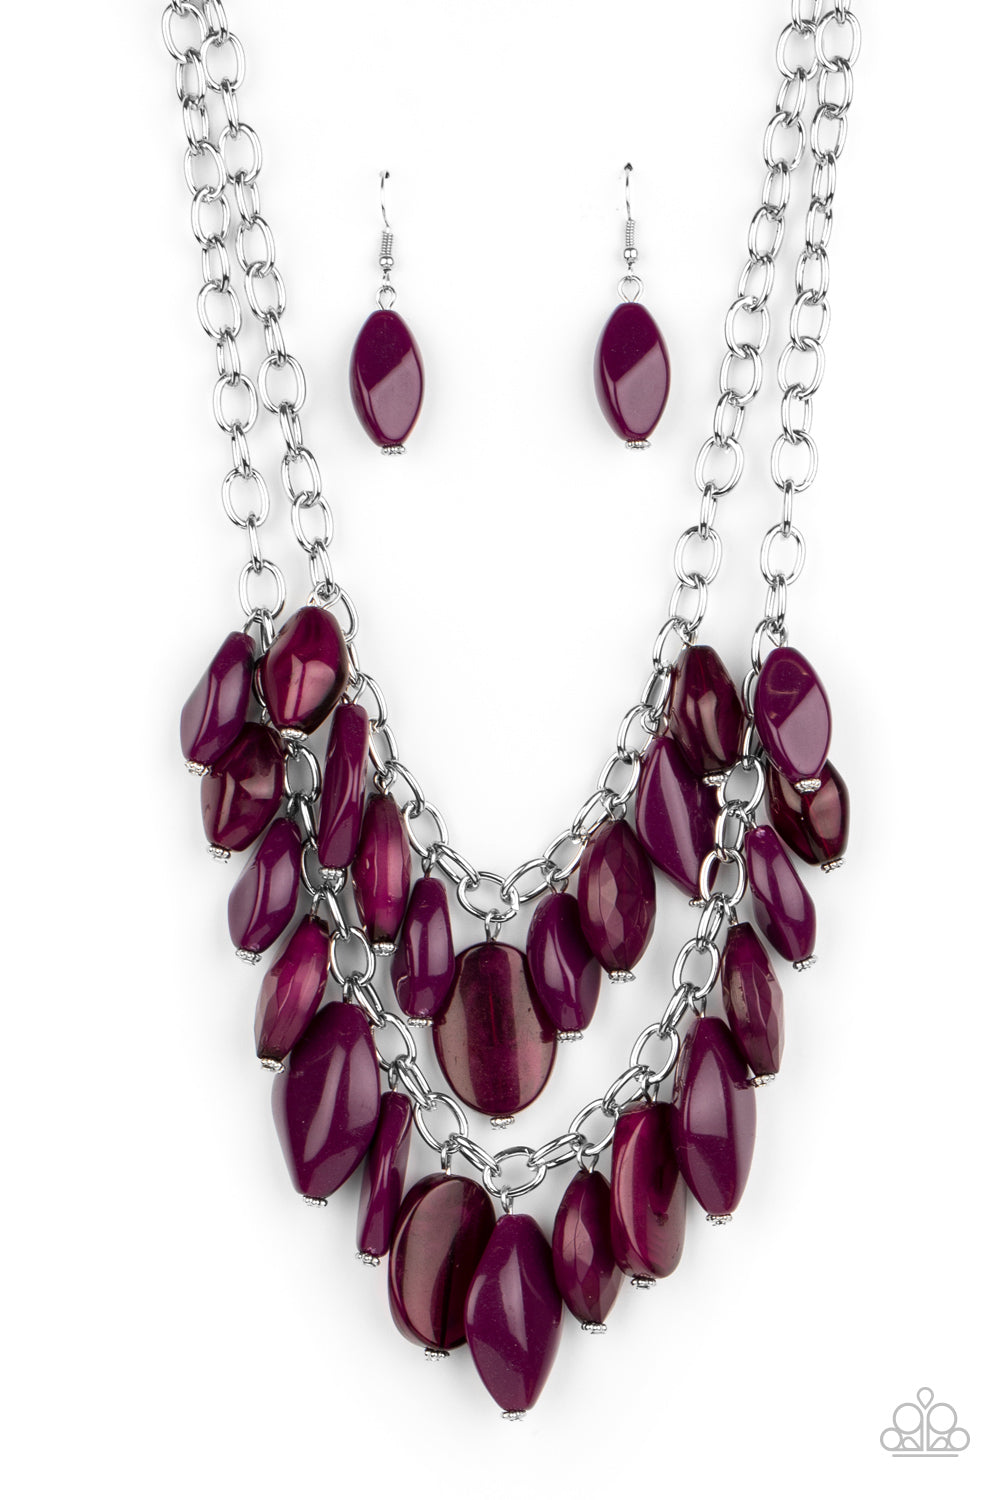 Paparazzi Accessories Palm Beach Beauty - Purple Necklaces - Lady T Accessories